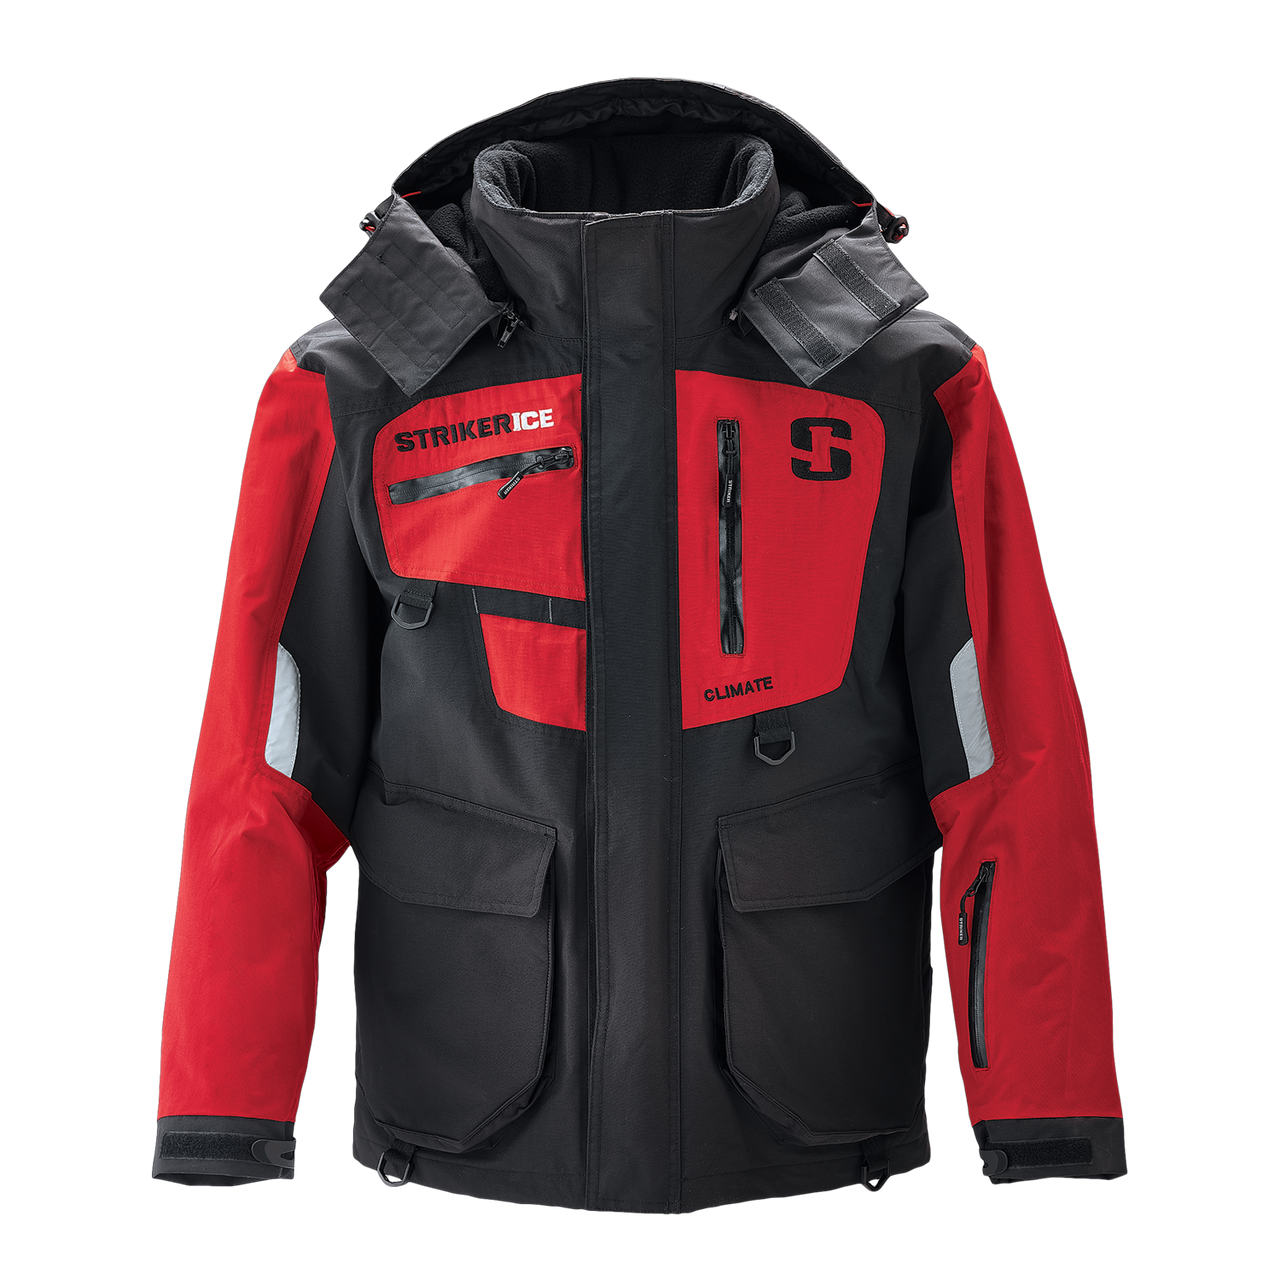 Striker Ice Climate Jacket - Black/Red - L